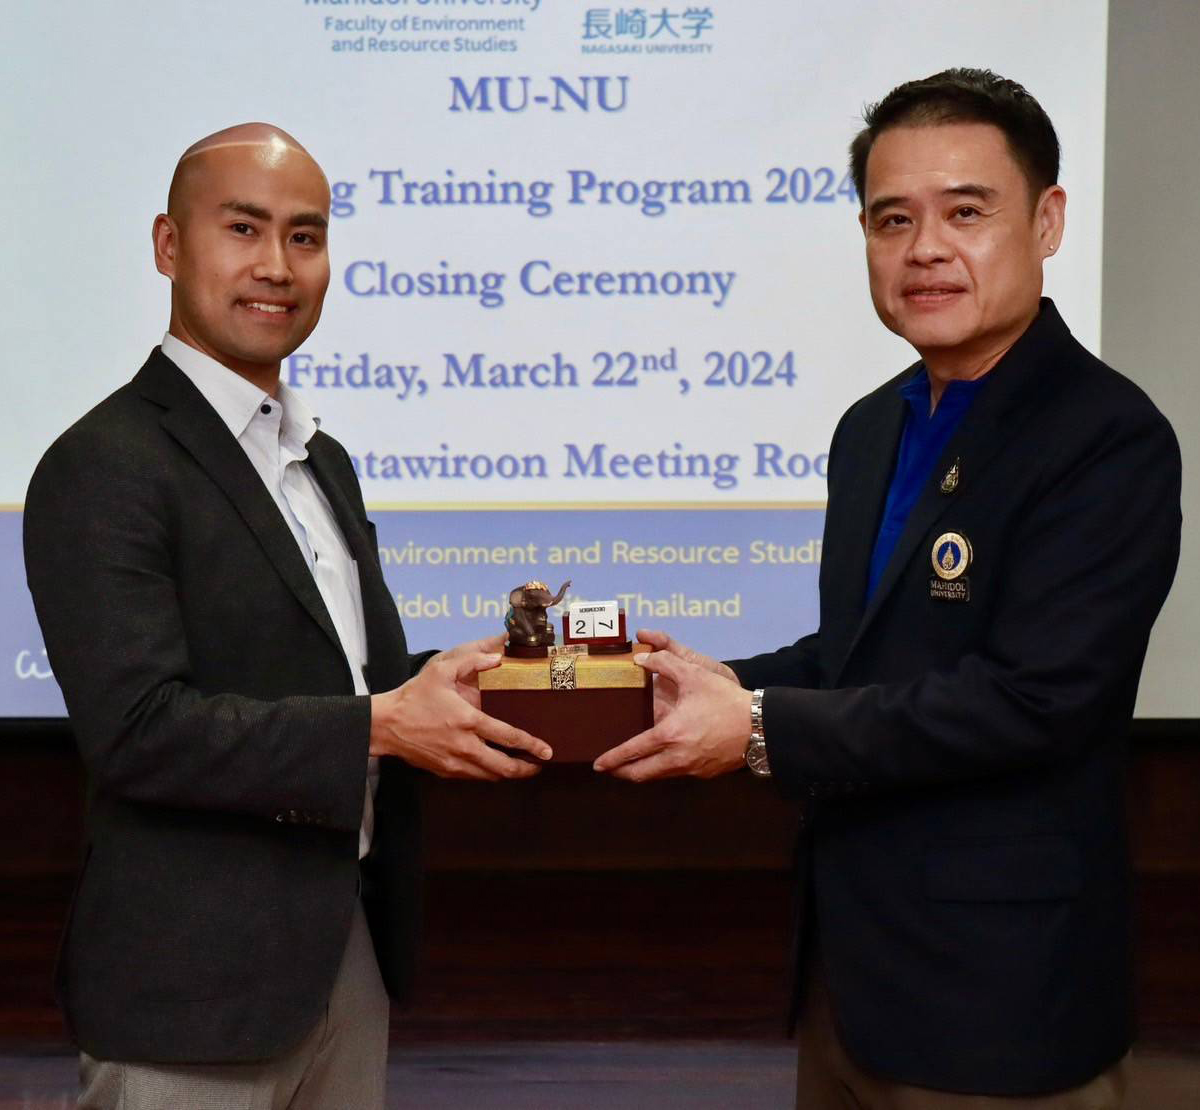 MU-NU Spring Training Program 2024 Closing Ceremony